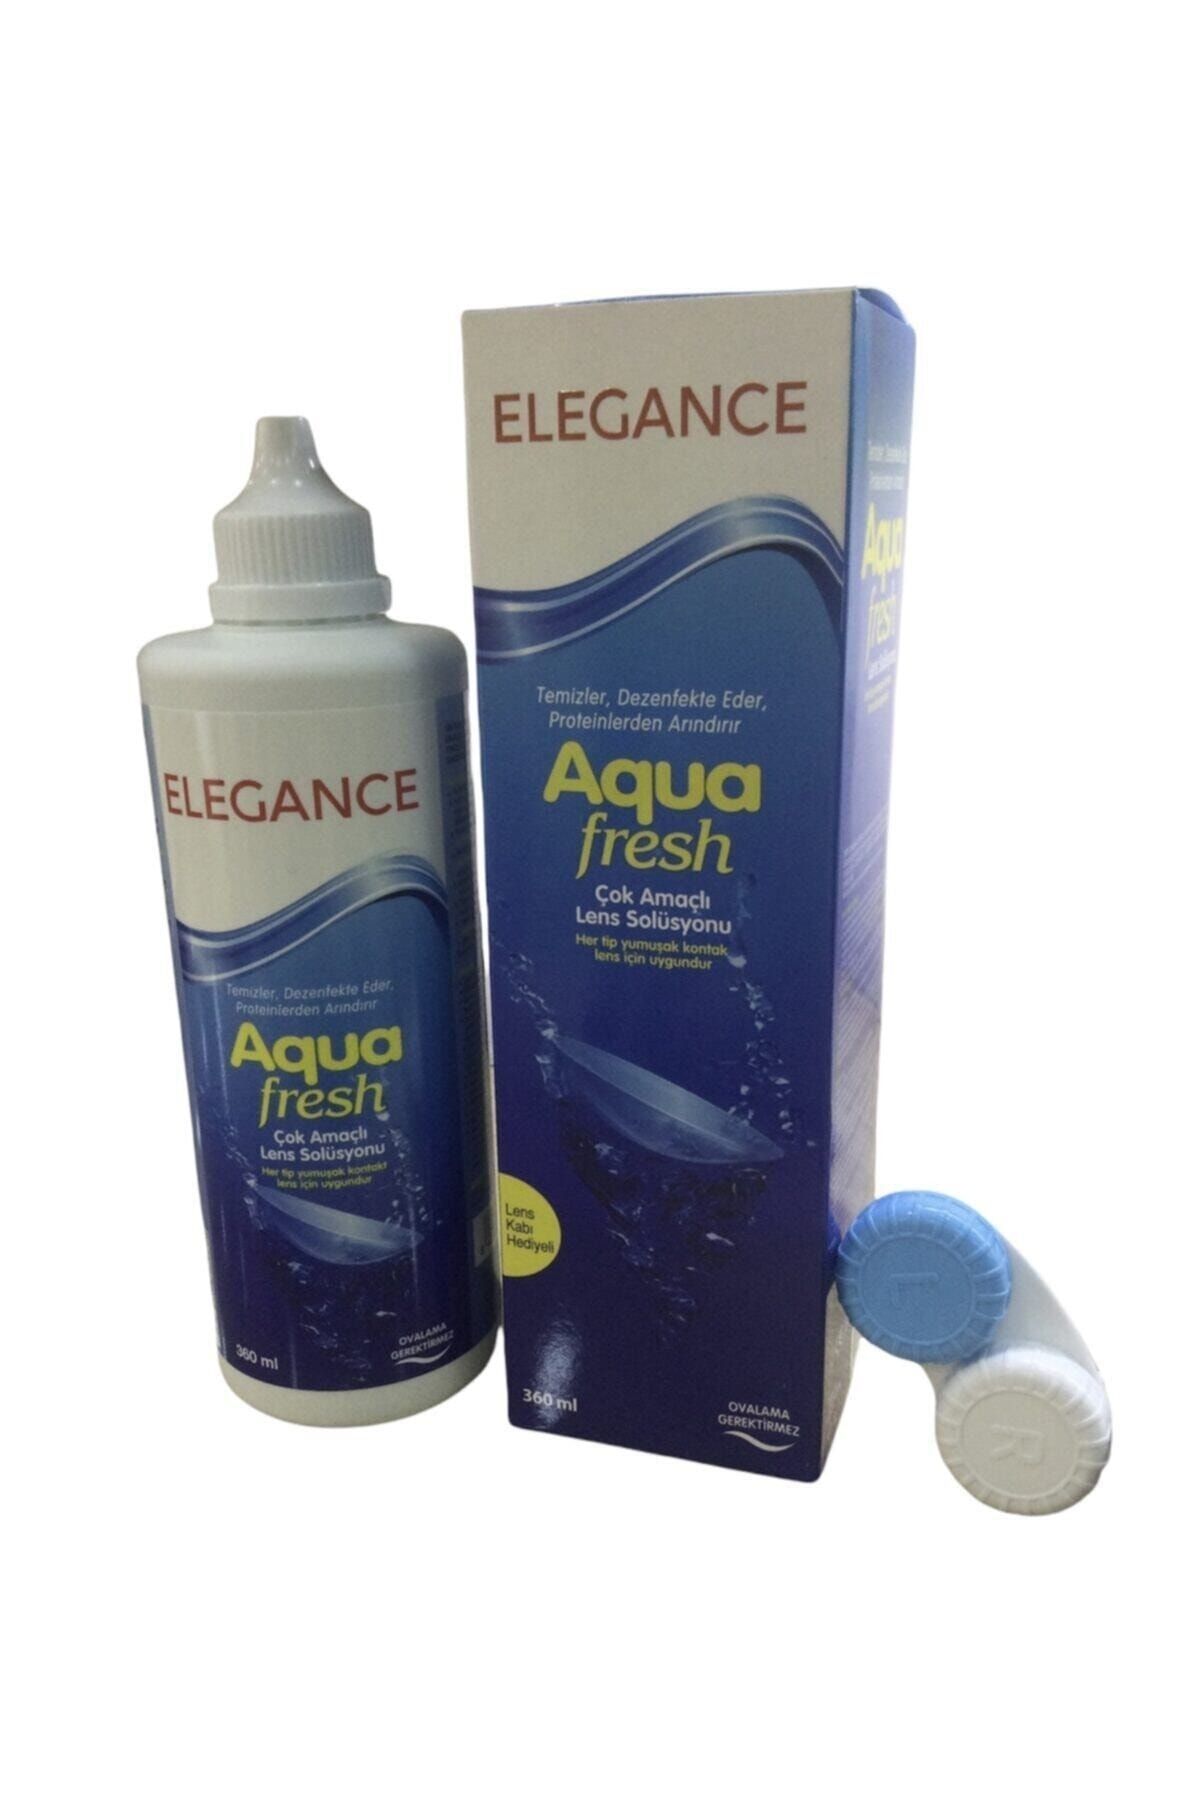 Elegance Aqua Fresh Lens Solüsyonu 360 ml